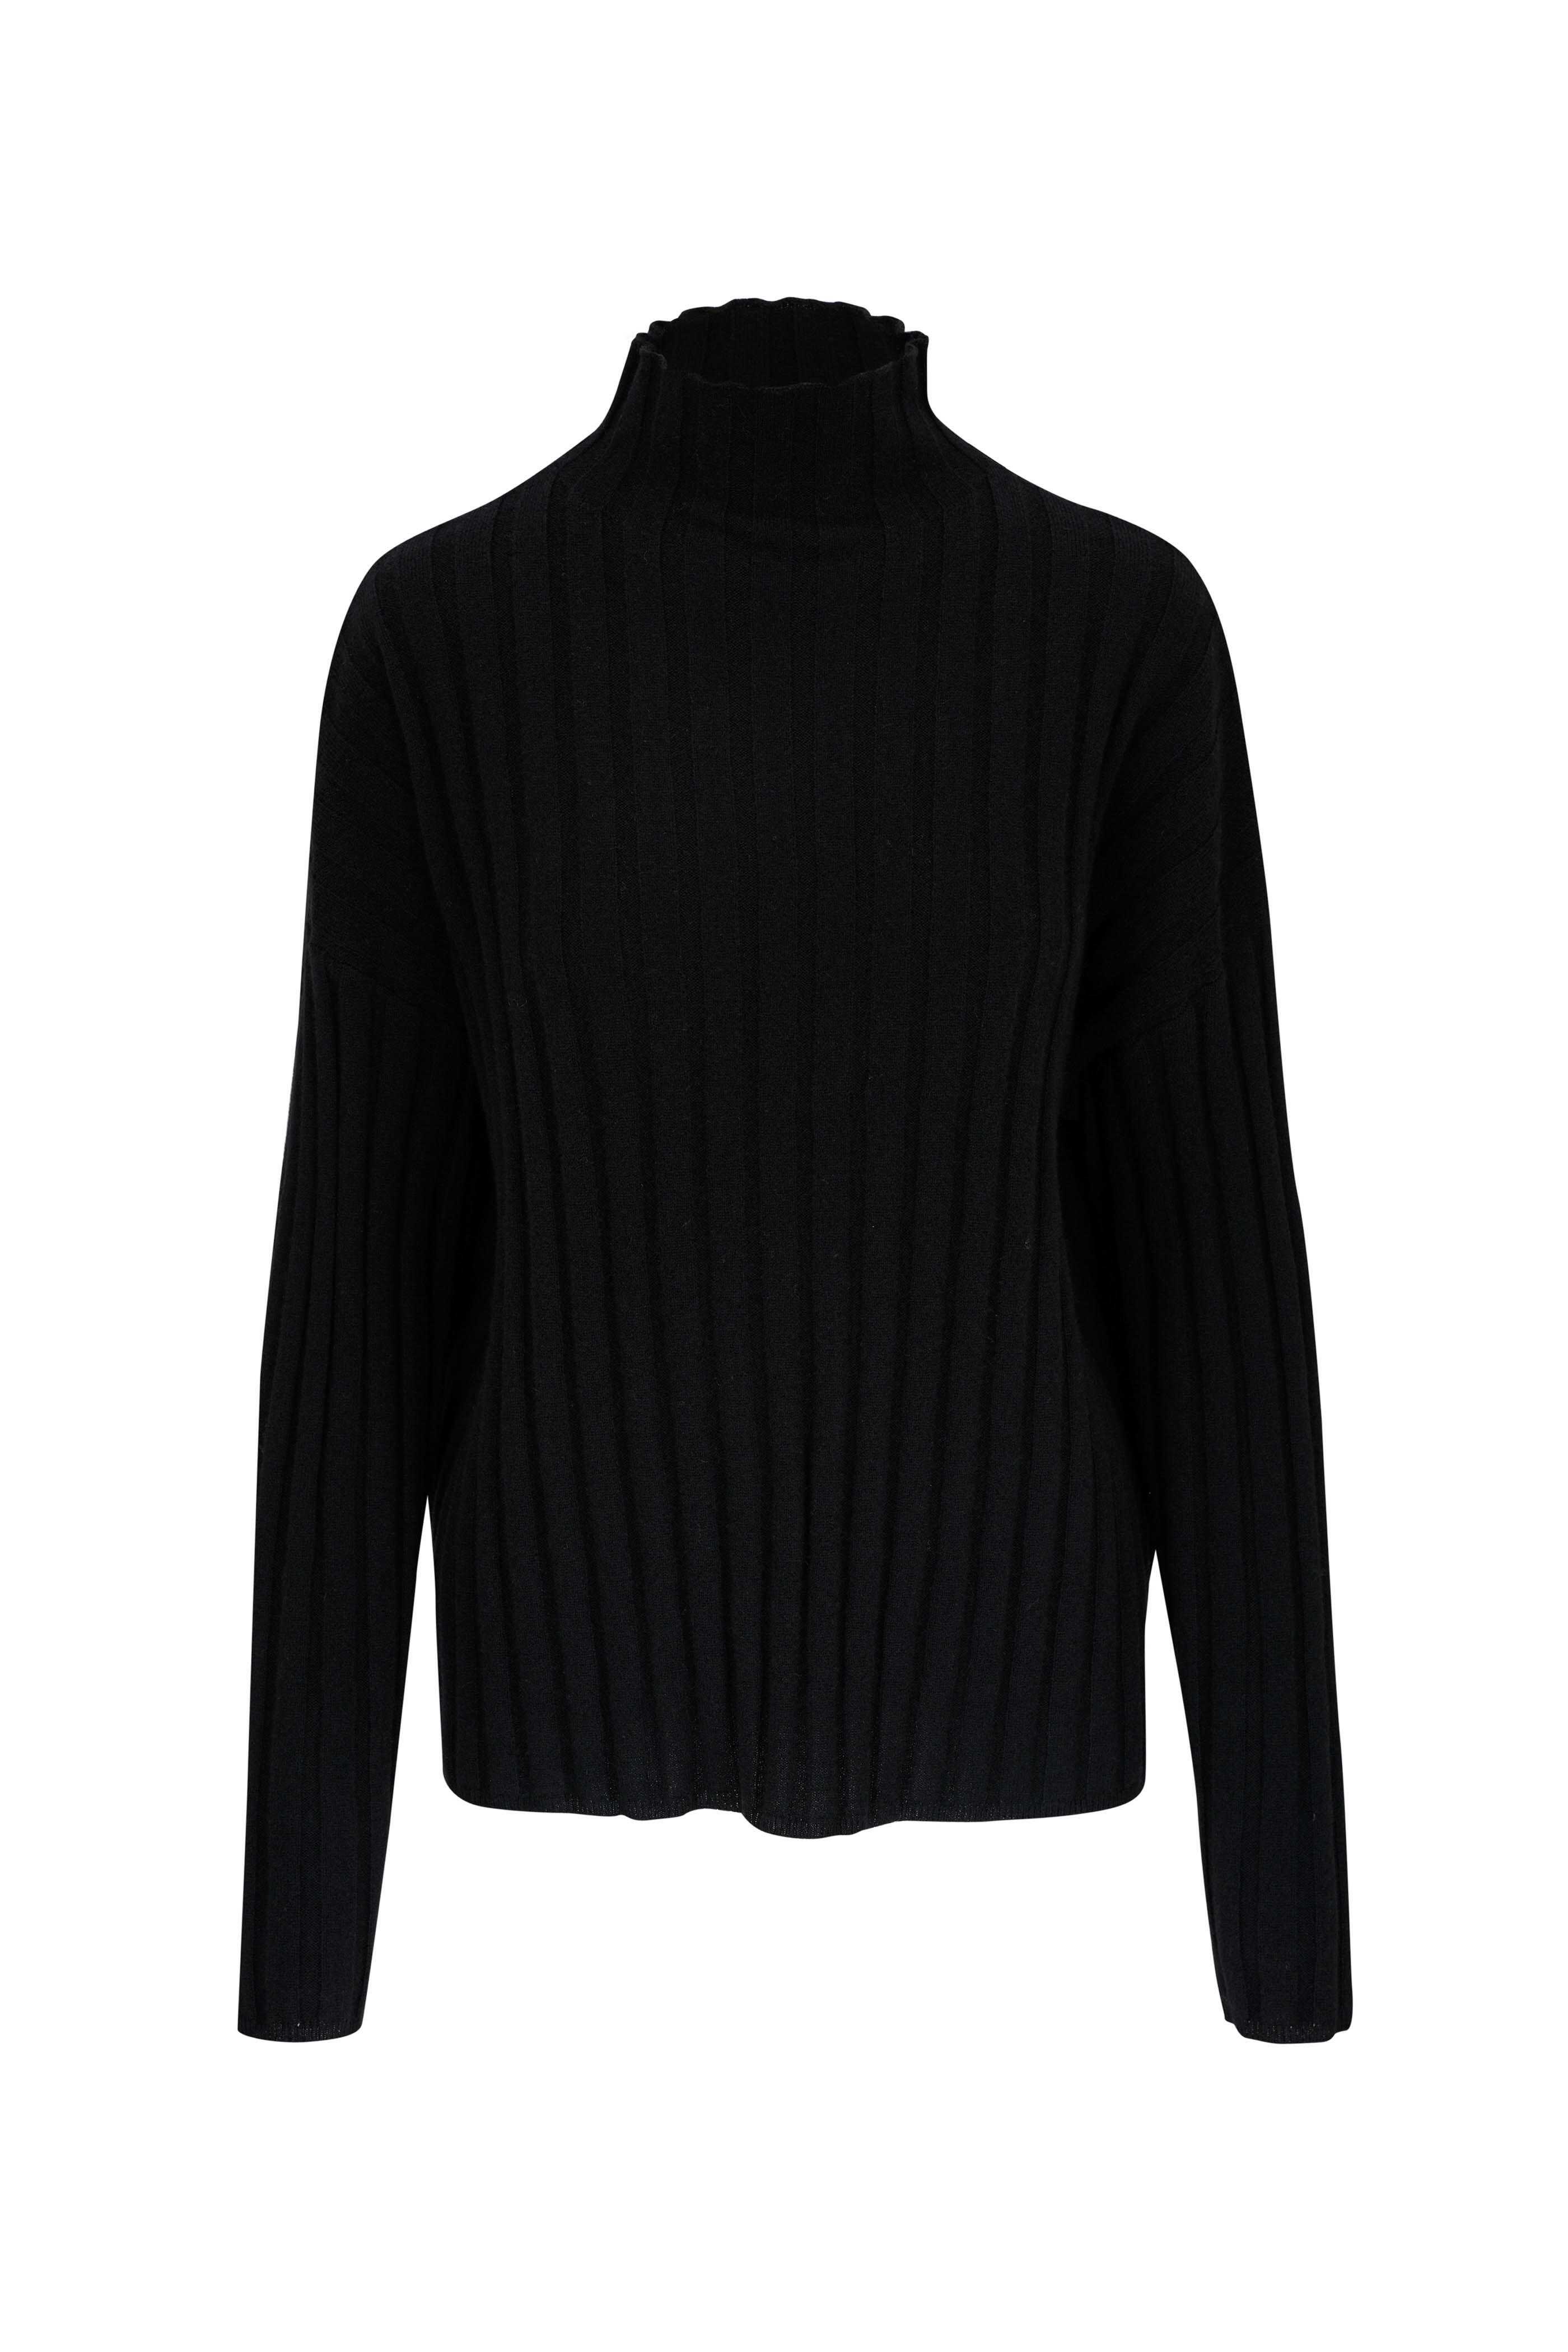 Lisa Yang - Inga Black Mock Neck Cashmere Sweater